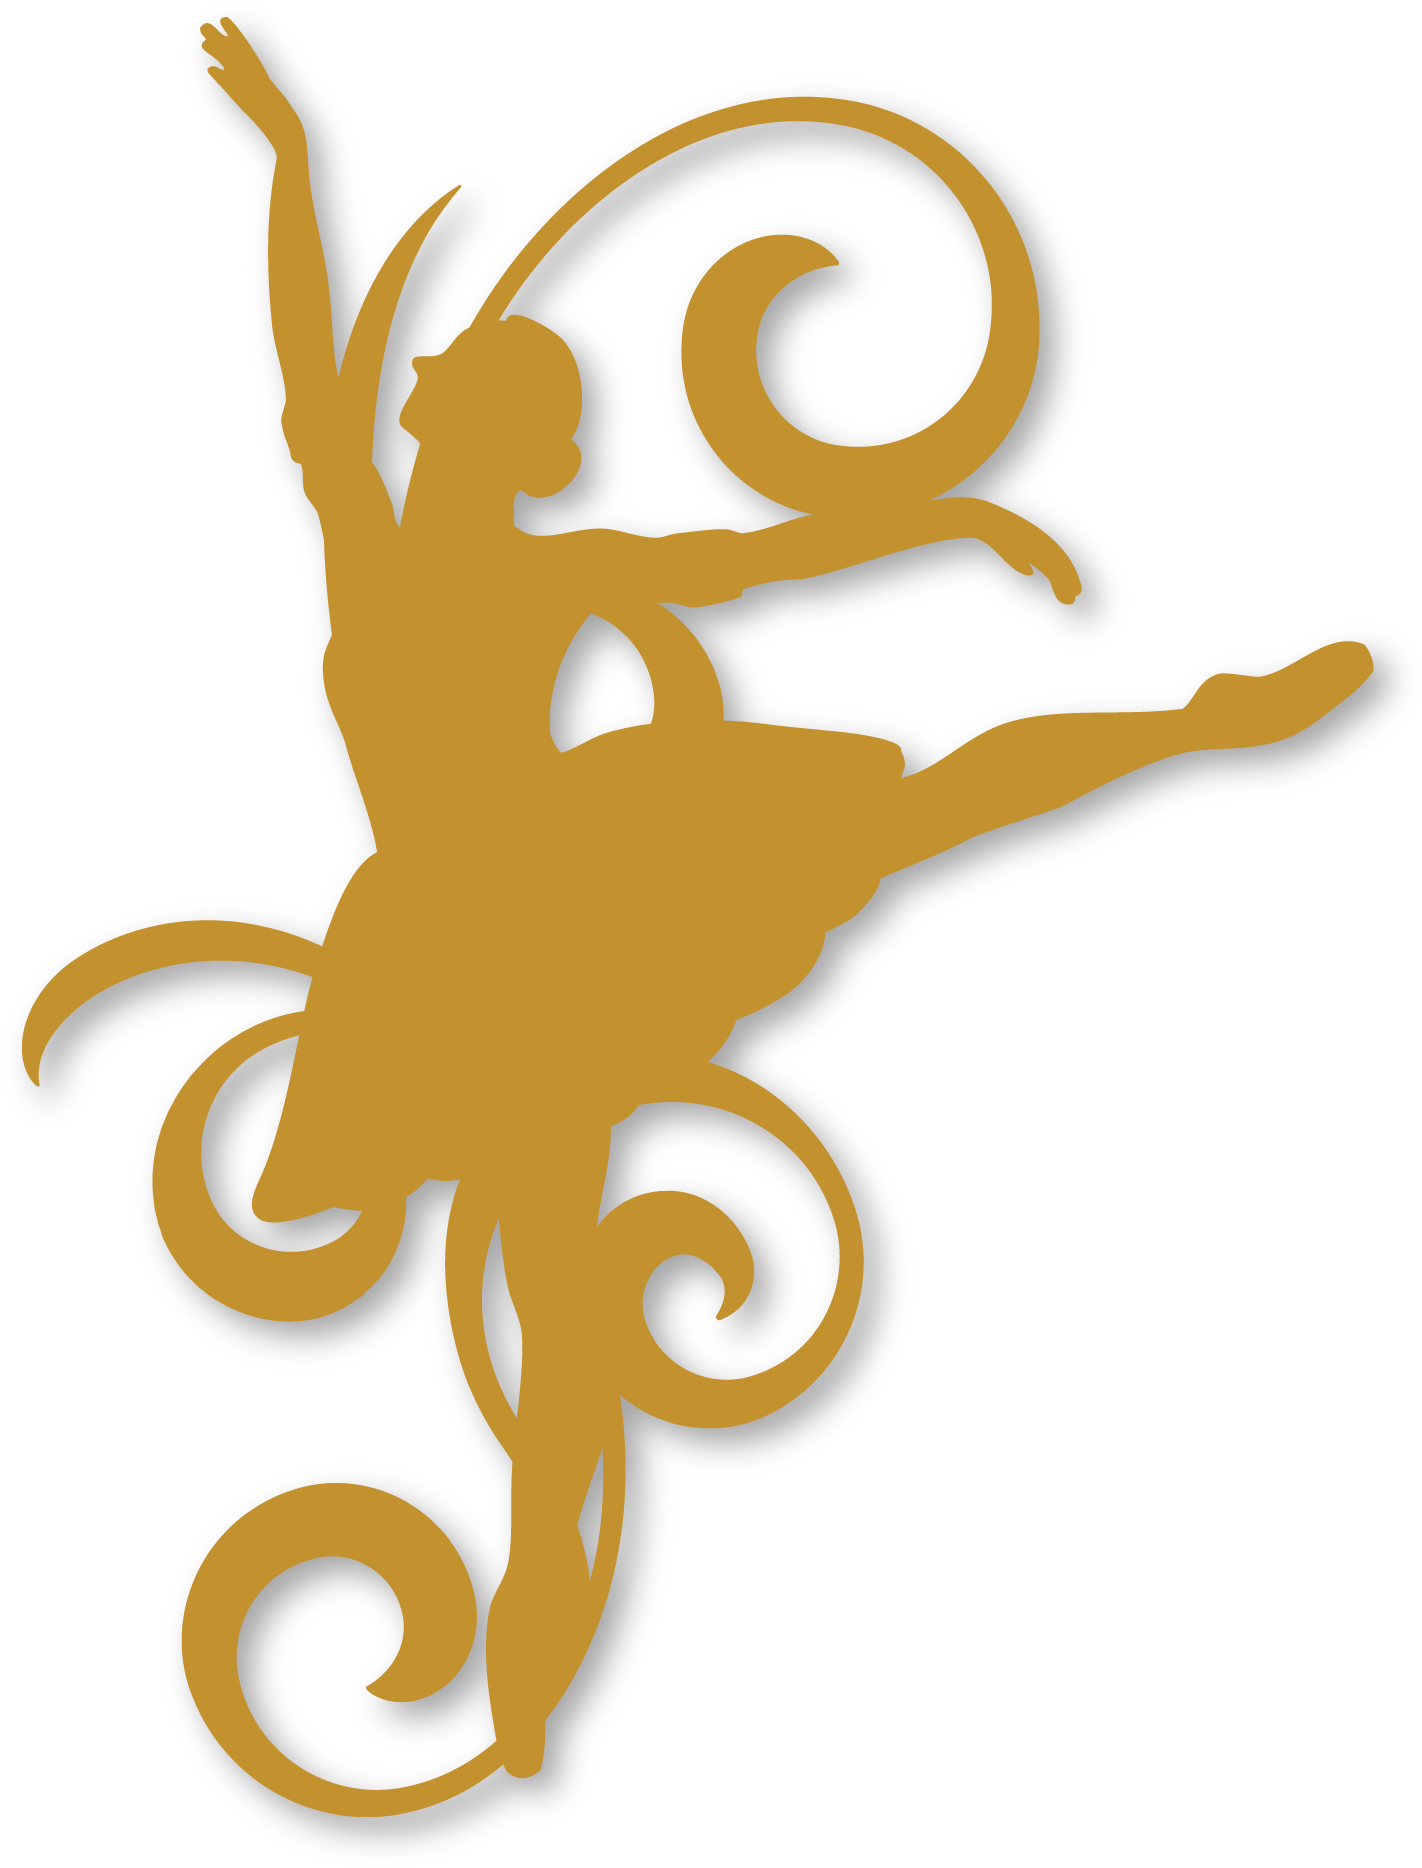 Ballet Dancer Silhouette Art - Dance Certificate Border Design (1442x1890)